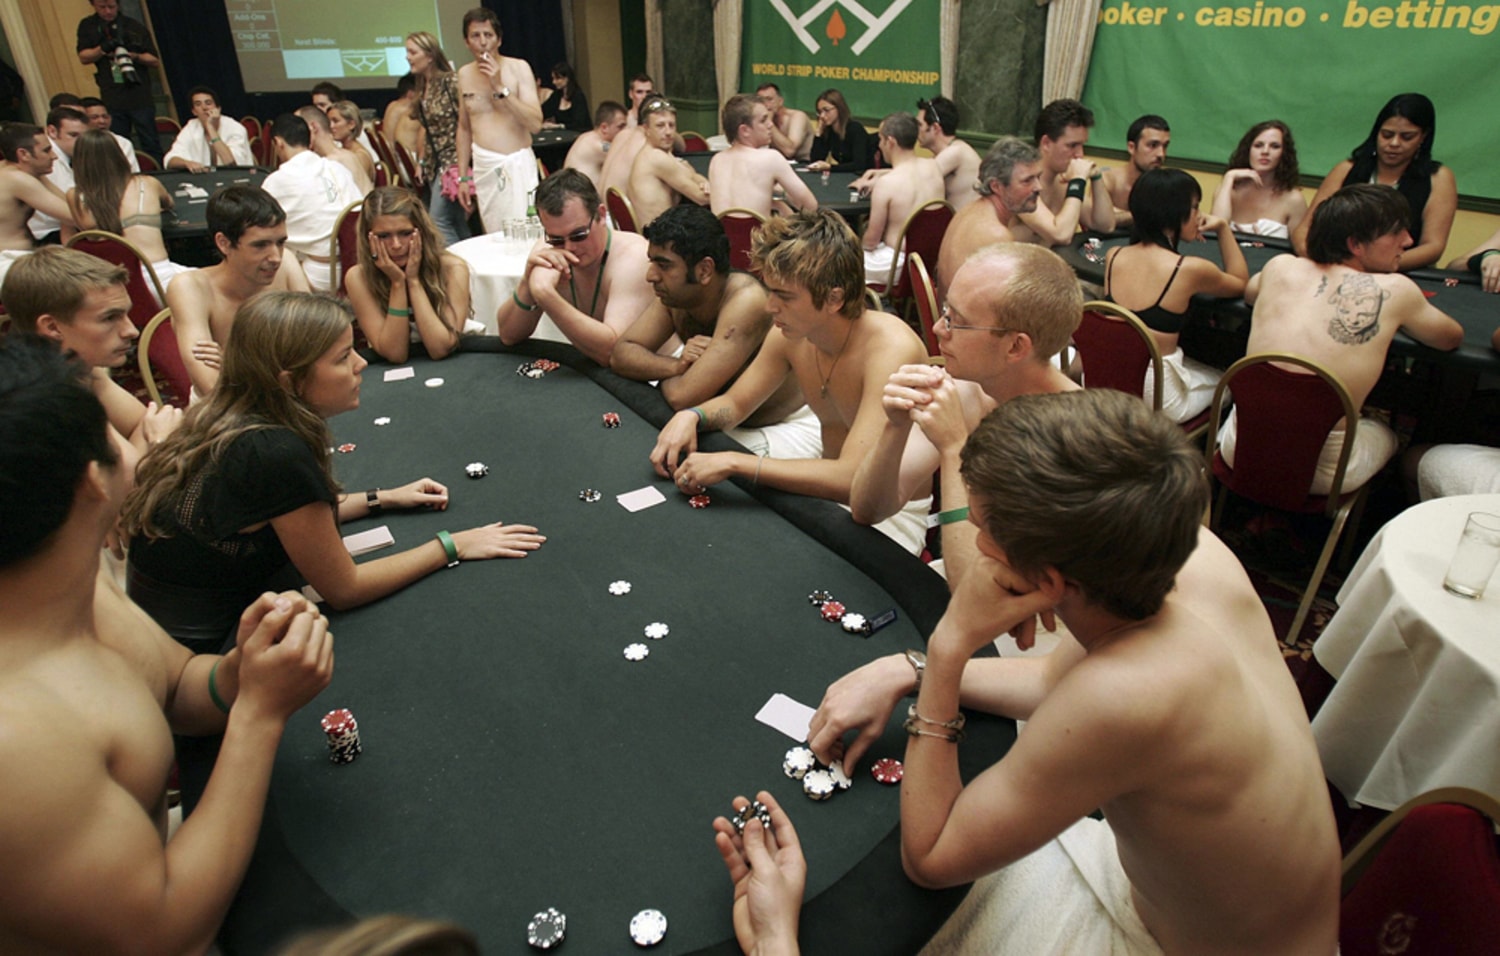 Stripp poker